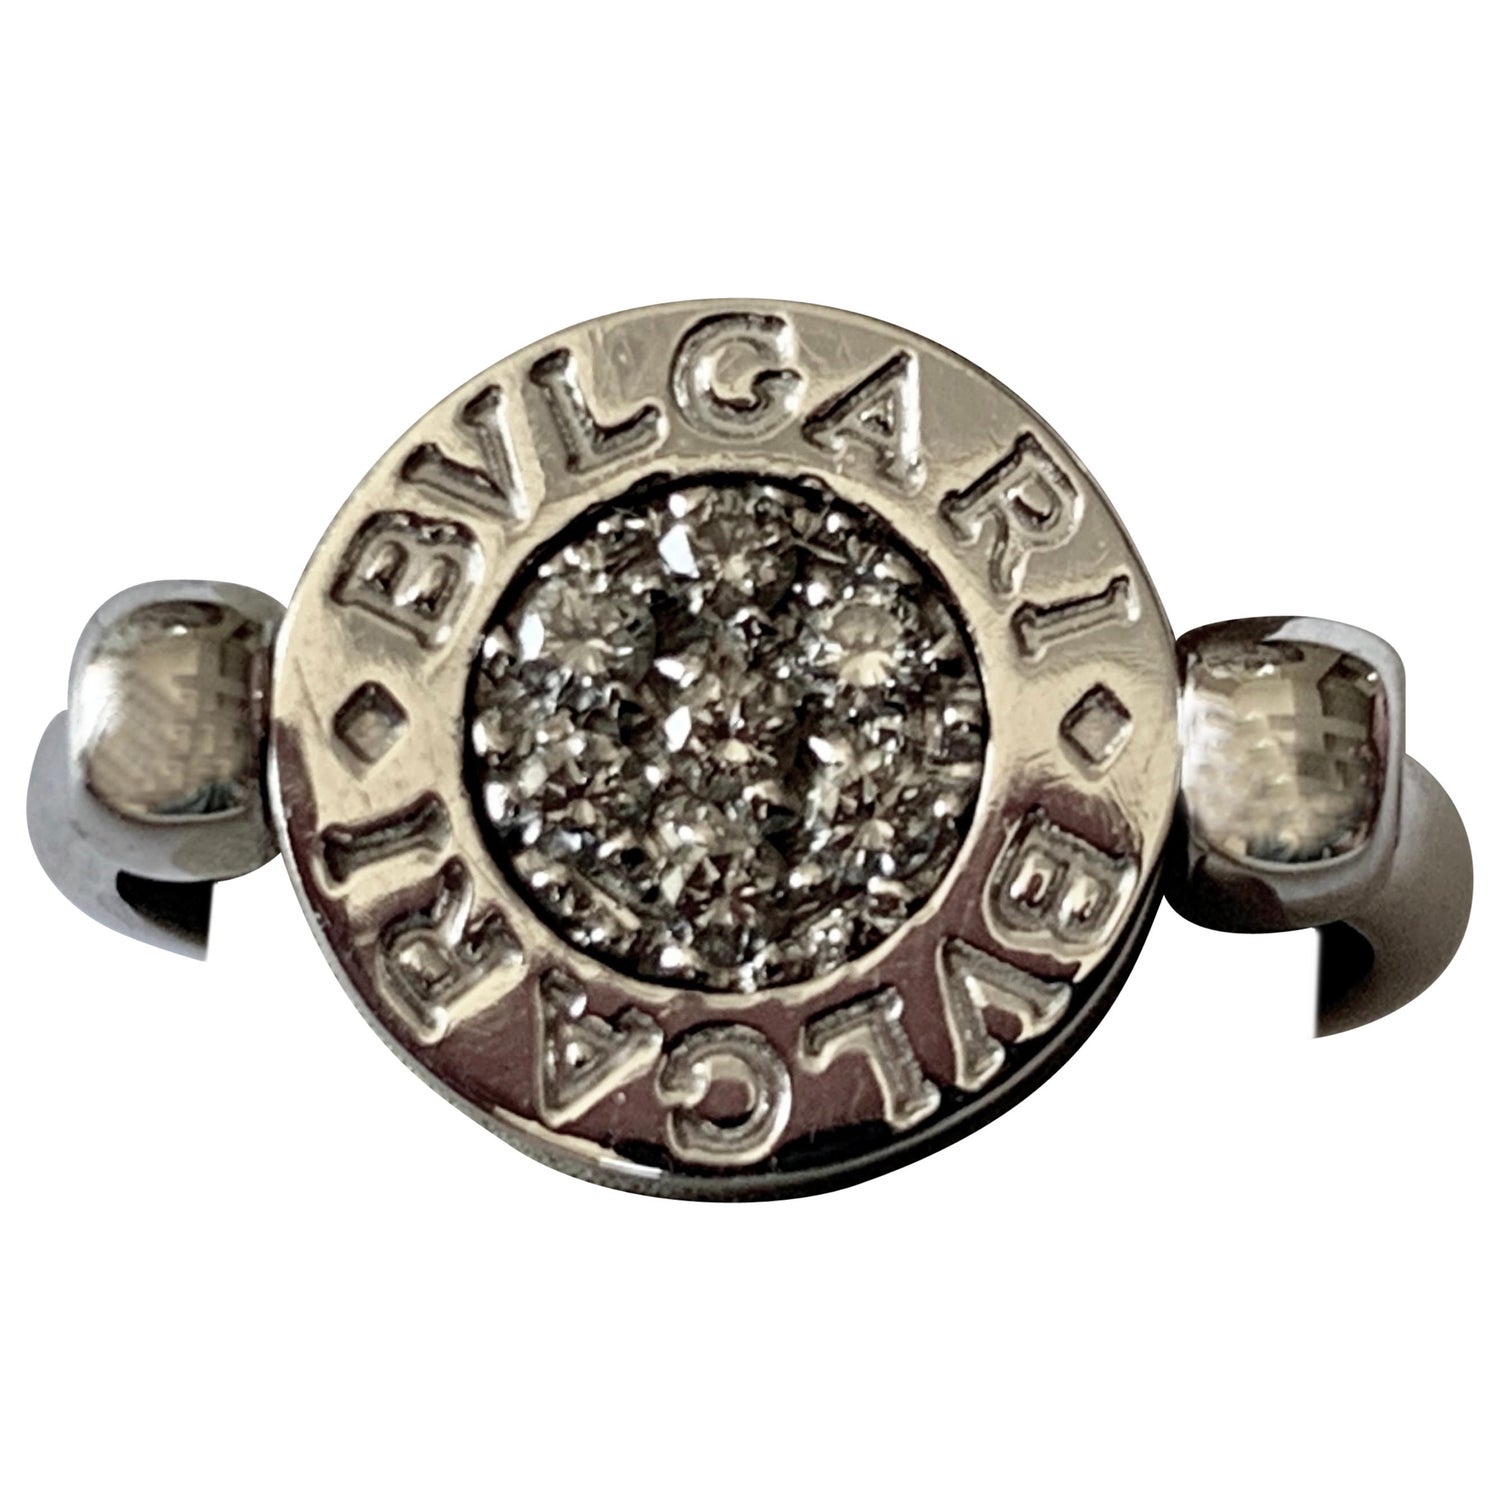 90s Key Ring Vintage/black Leather Key Ring Bulgari Vittorio